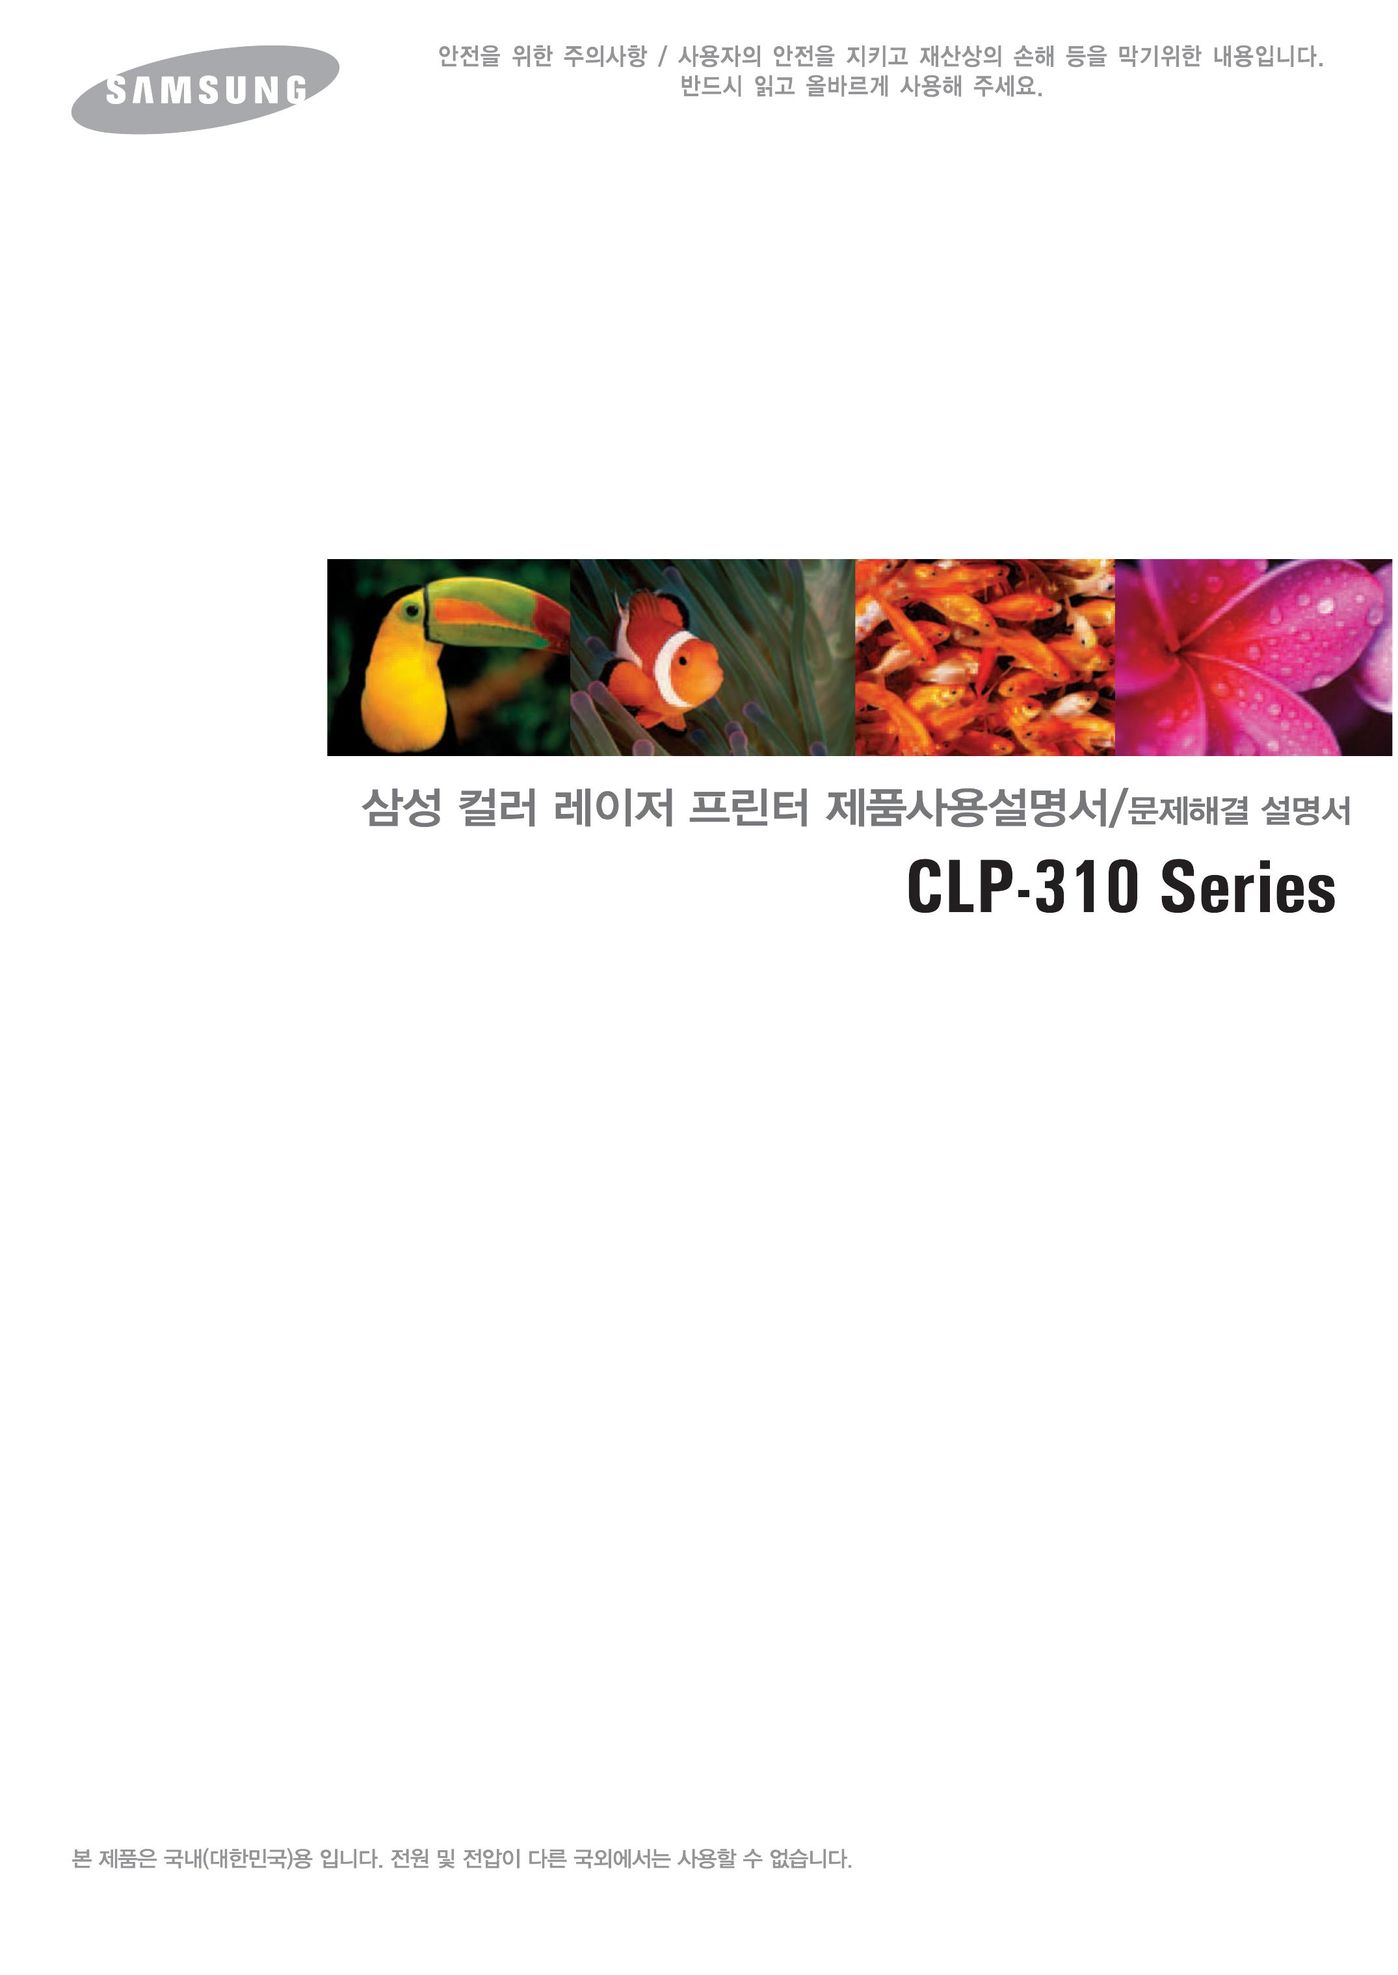 Samsung CLP-310WKG All in One Printer User Manual